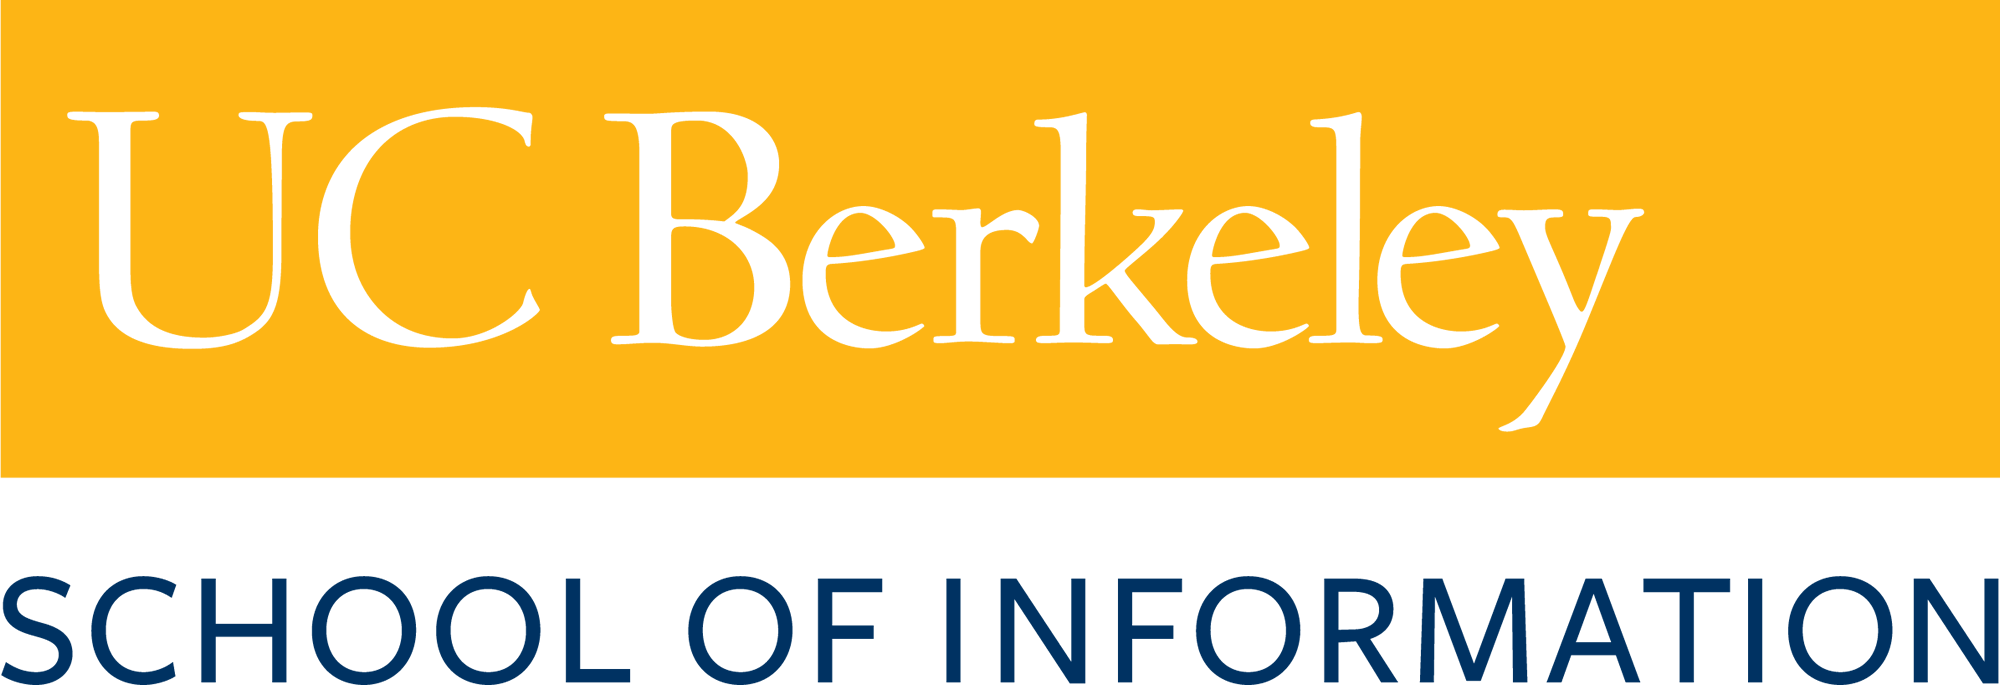 Uc Berkeley Logo Transparent Png Stickpng - vrogue.co